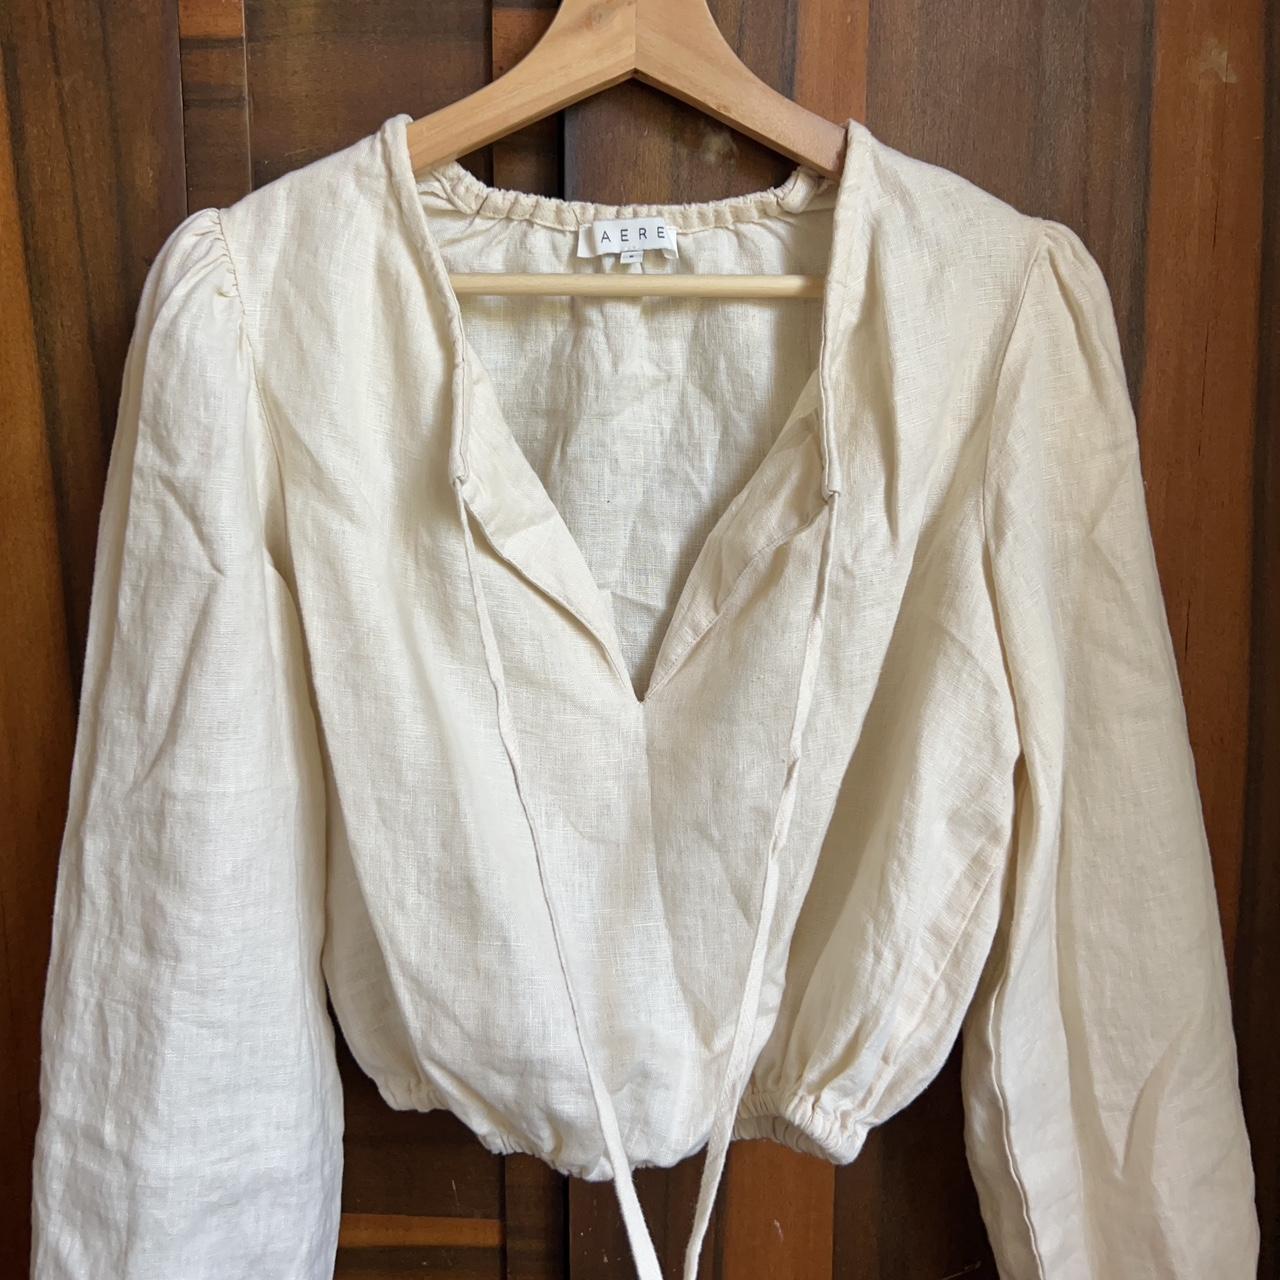 AERE linen blouse 🕊️ Repop - too big for me. Tag says... - Depop